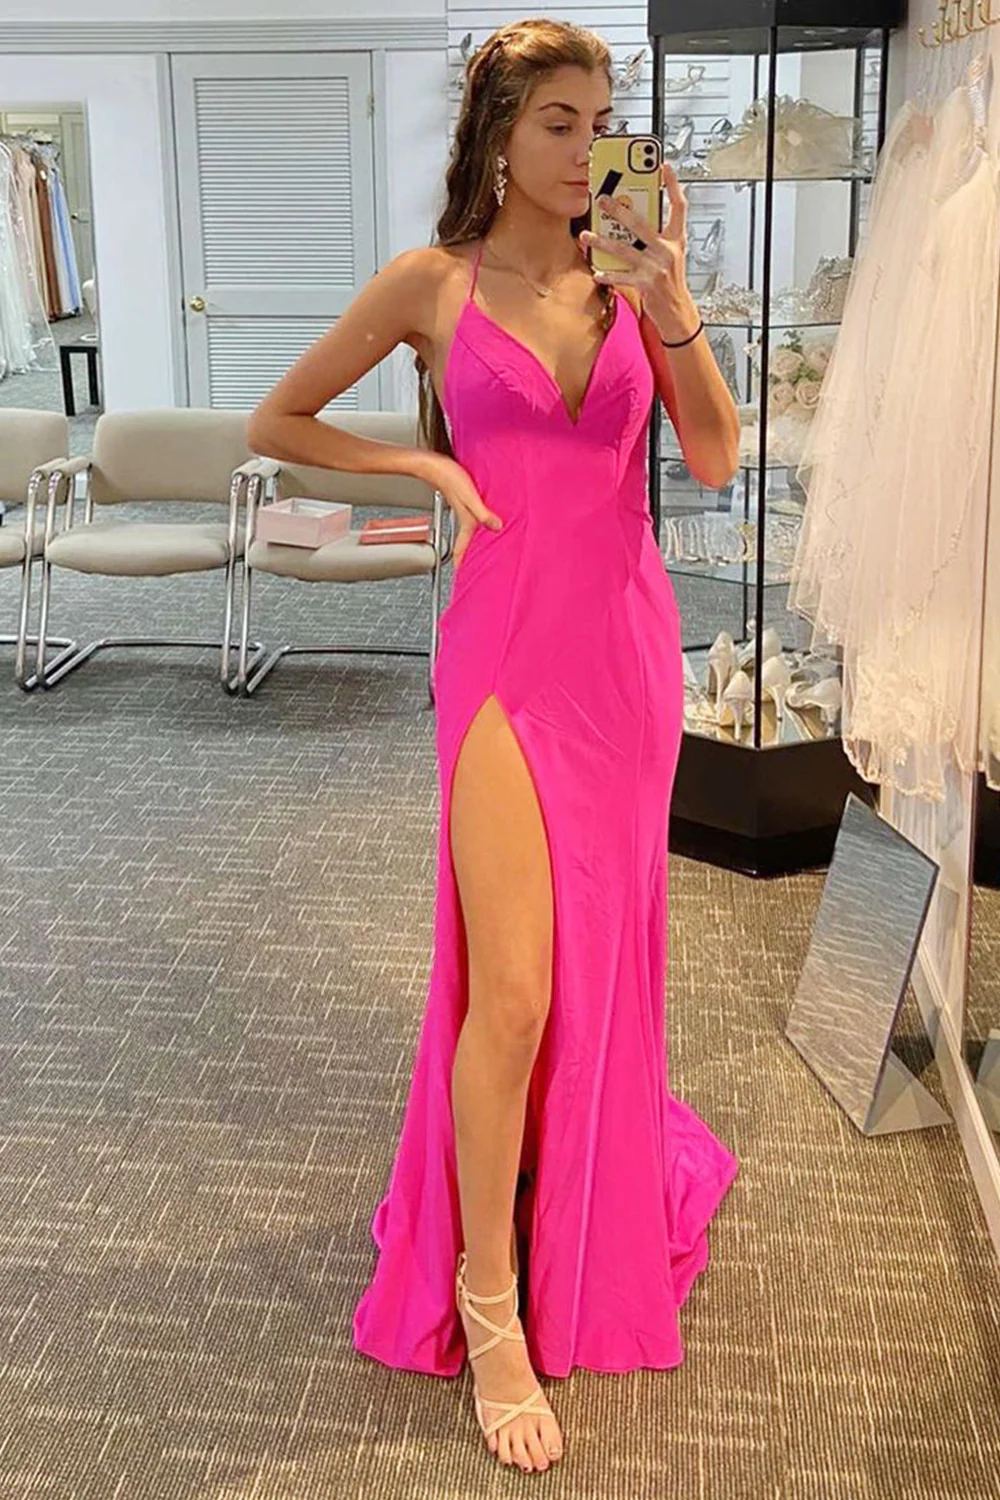 Beading Hot Pink Halter Prom Dress with Slit nv680